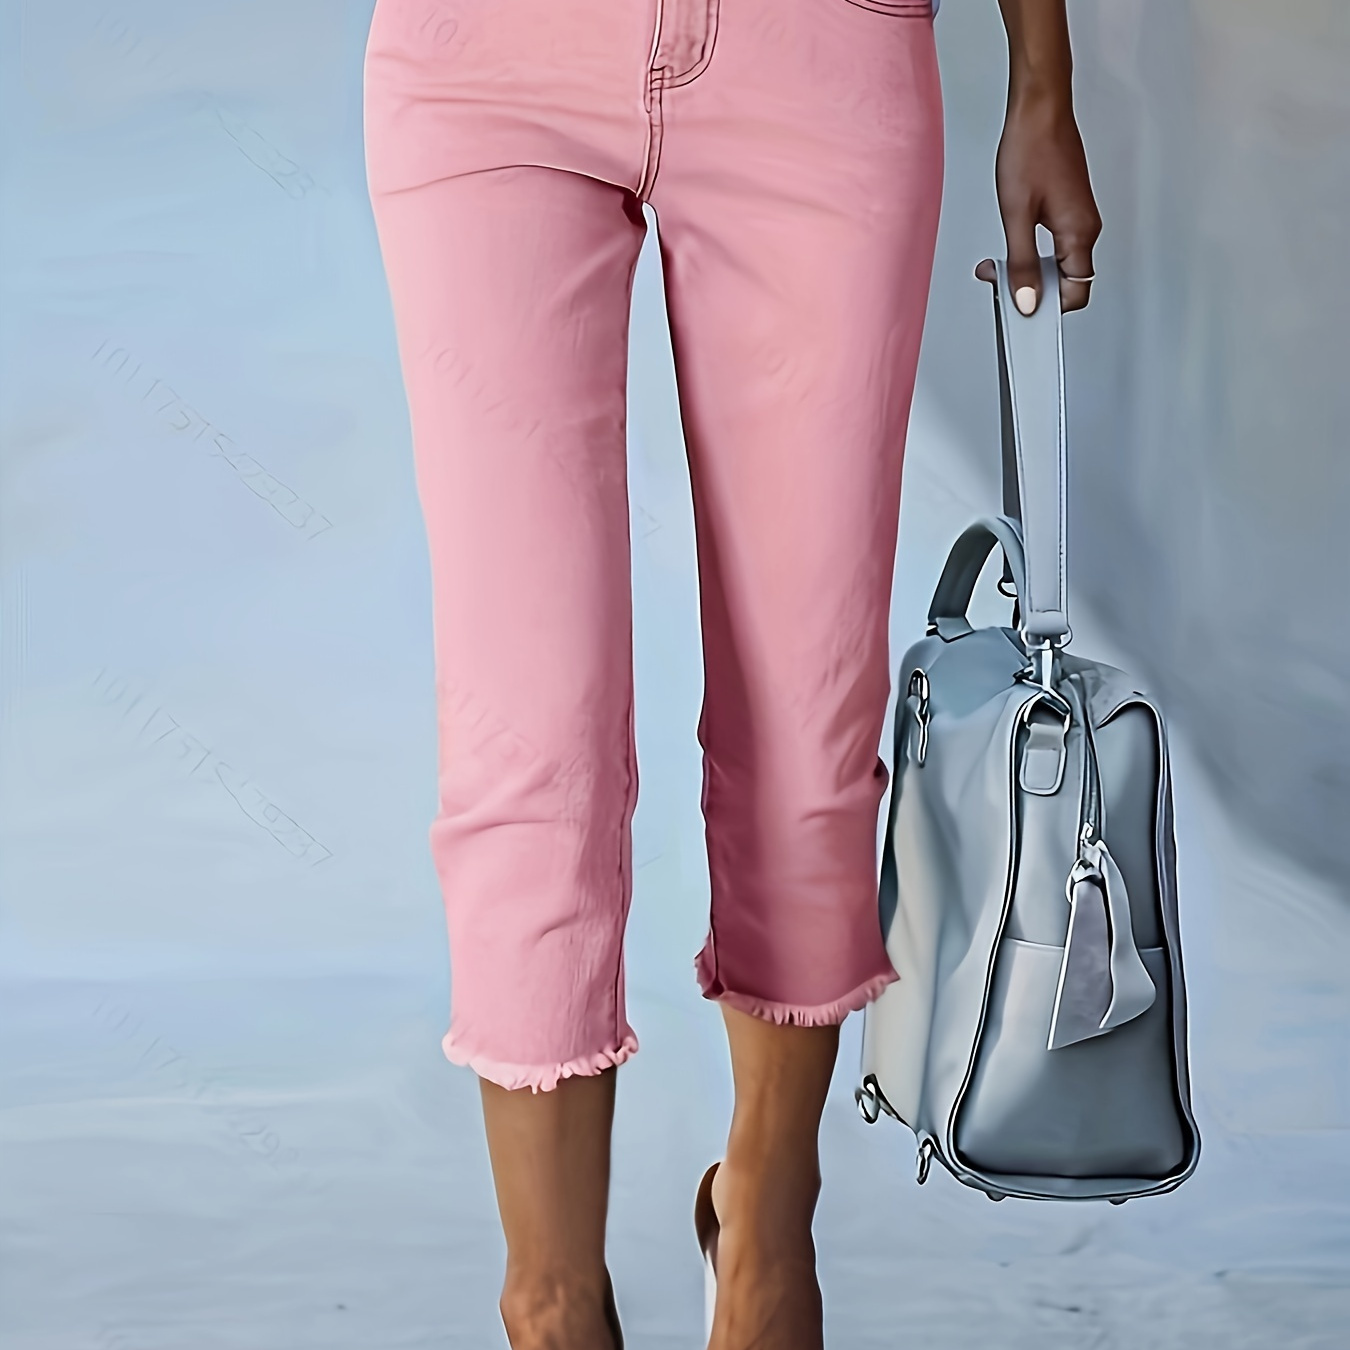 

Women's Summer Fashion Pinkish Plain Pastel Color Capri Pants, Casual Style, Frayed Hem, Stretchy Denim, Comfort Fit, Versatile Wardrobe Essential